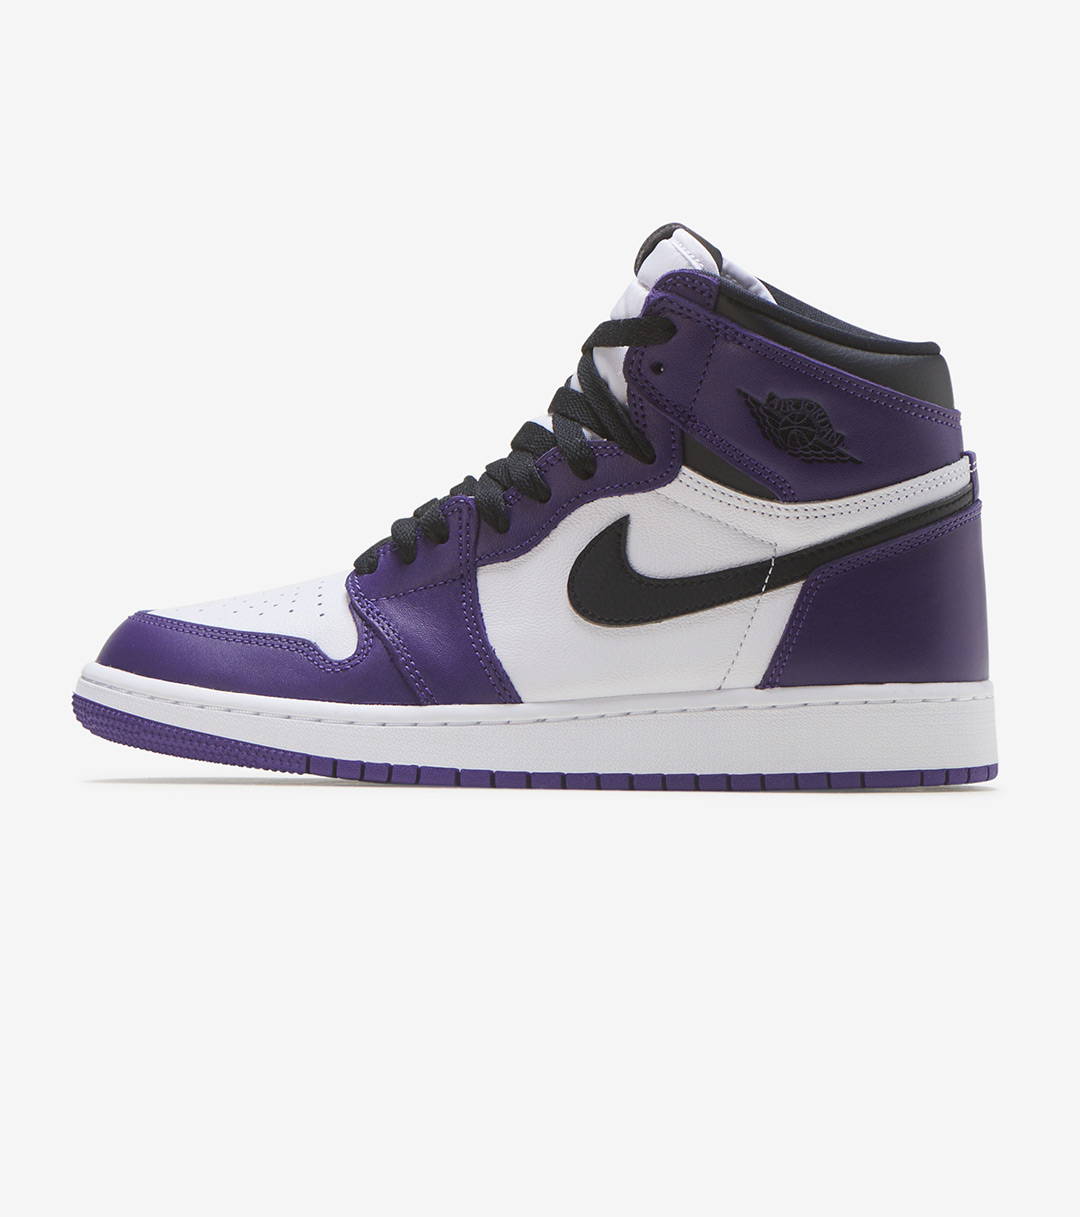 purple & white jordan 1s